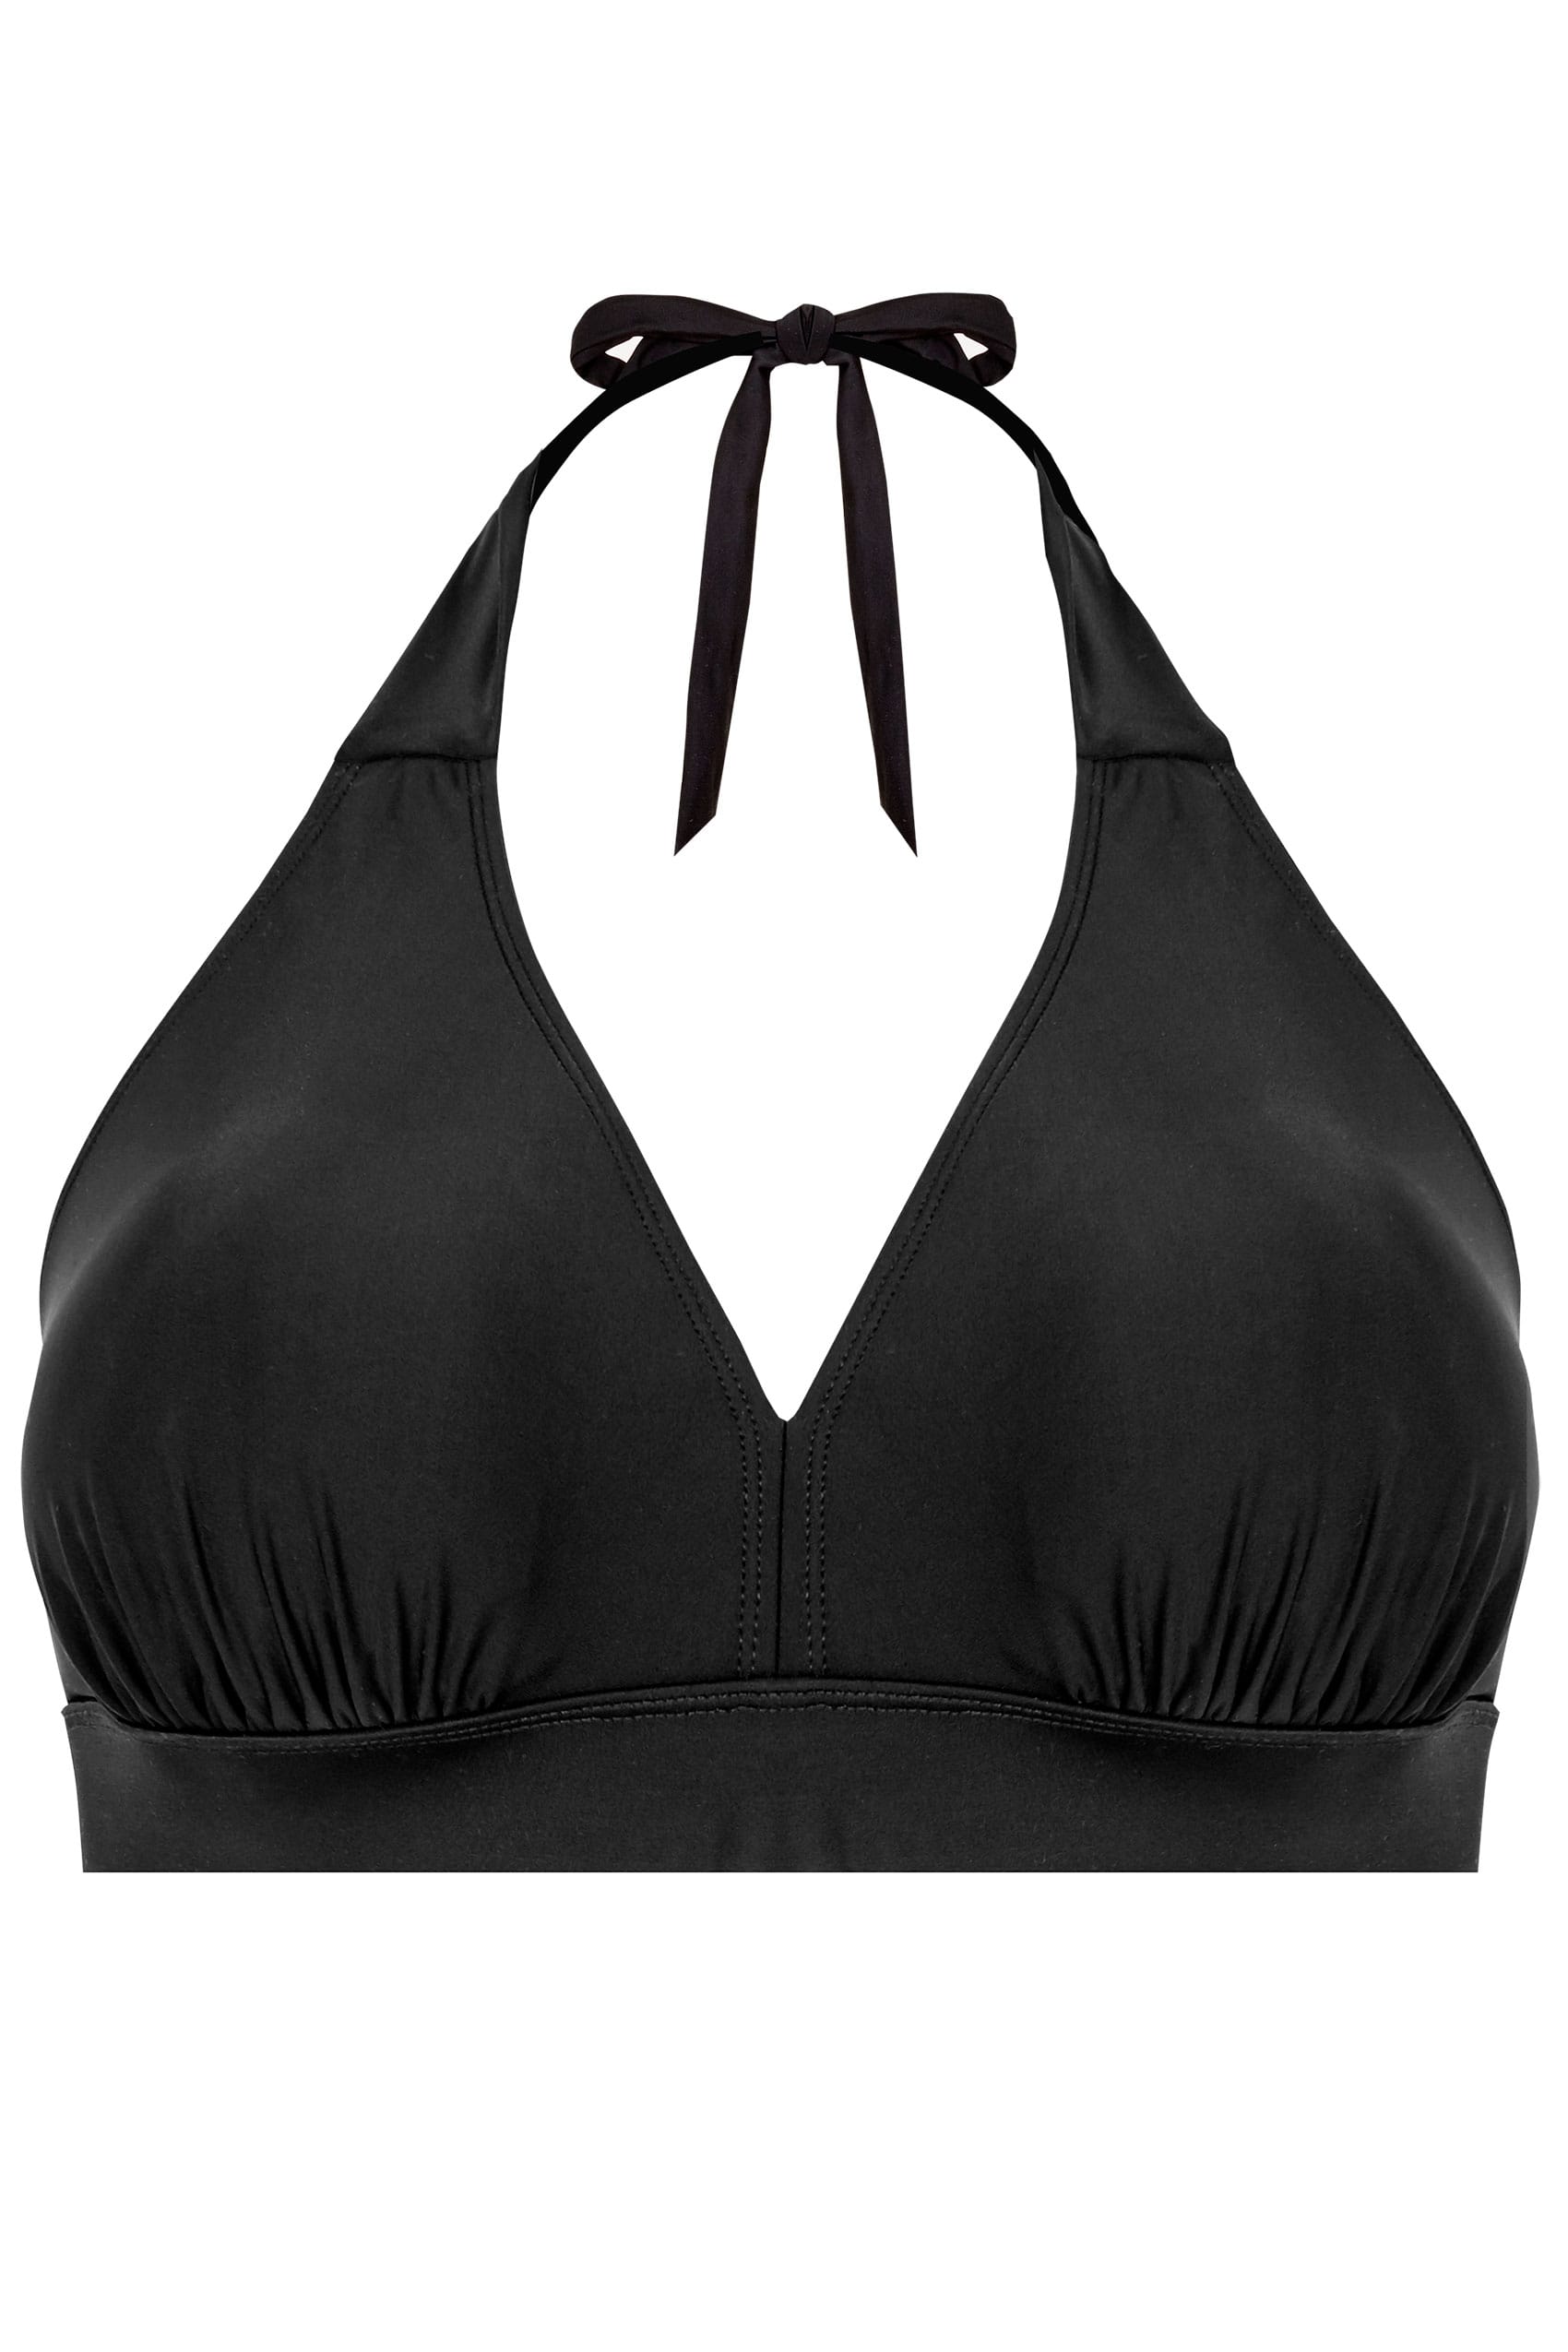 Black Halterneck Bikini Top , plus size 16 to 36